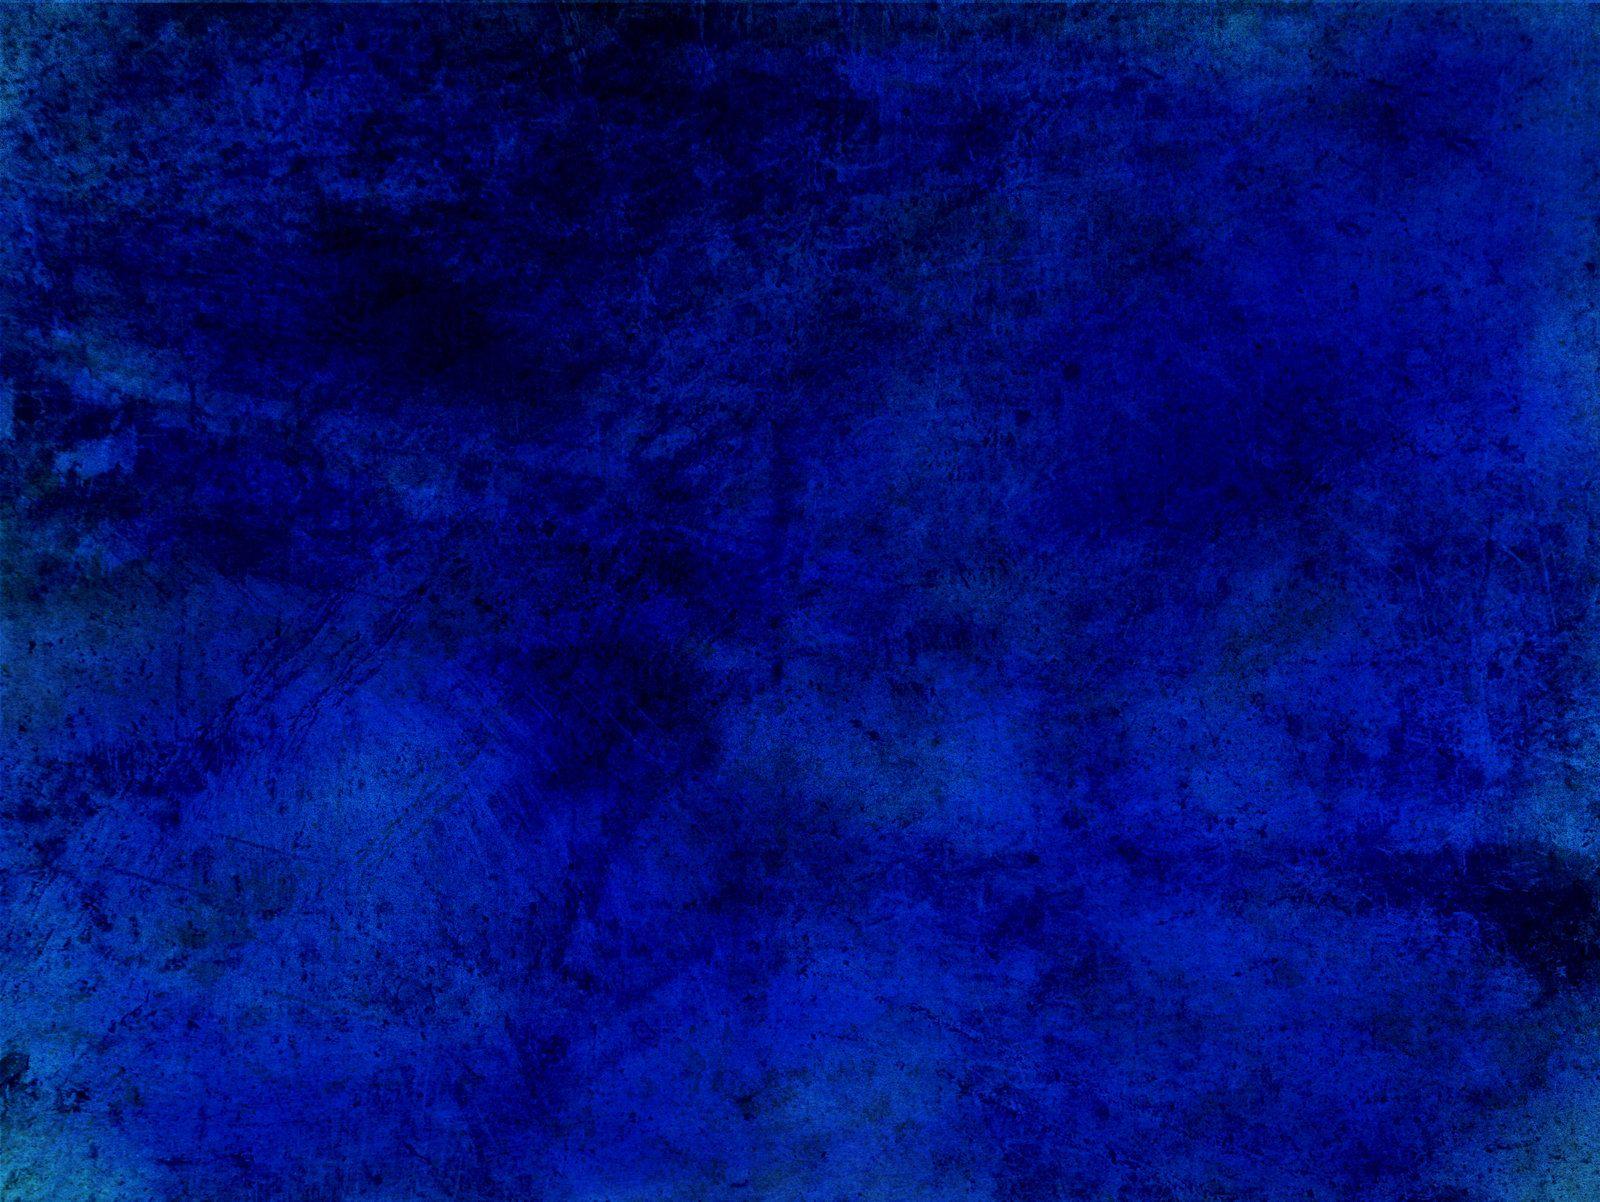 Dark Blue Grunge Backdrop / Digital Background